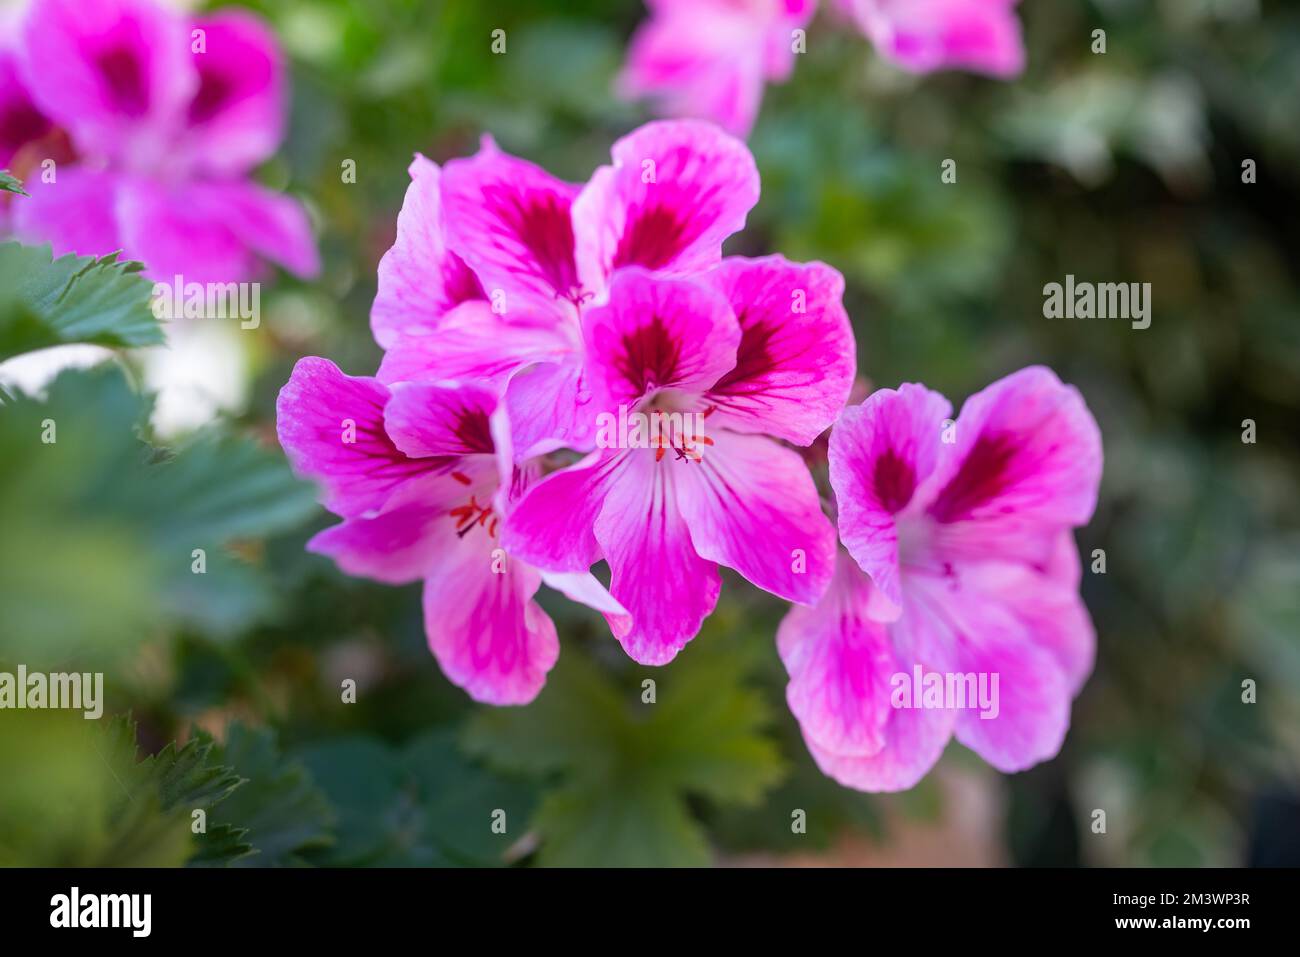 Pink flowers closeup on green leaves background. Large-flower pelargonium Stock Photo